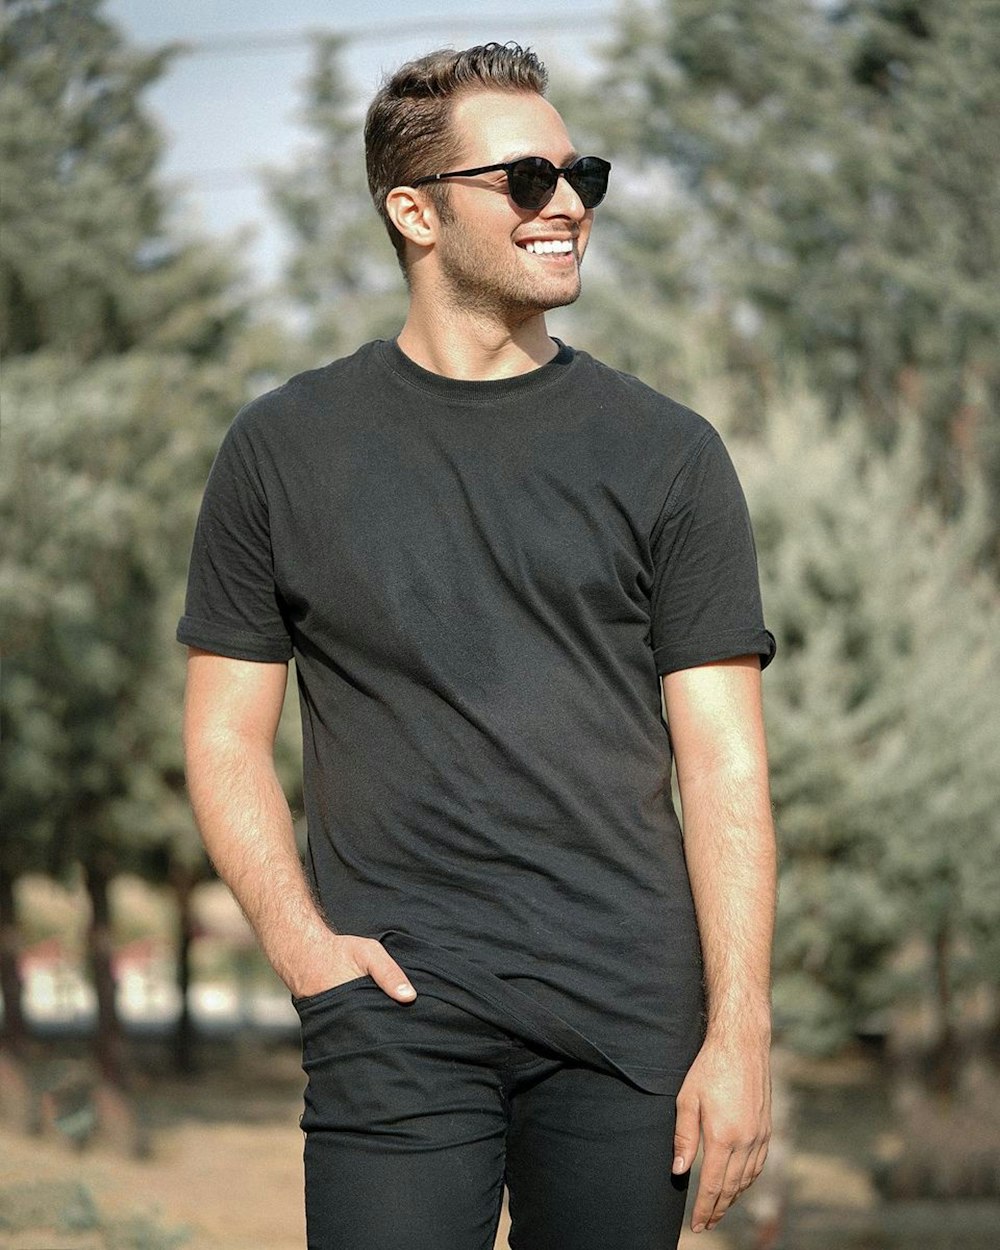 man in black crew neck t-shirt and black sunglasses